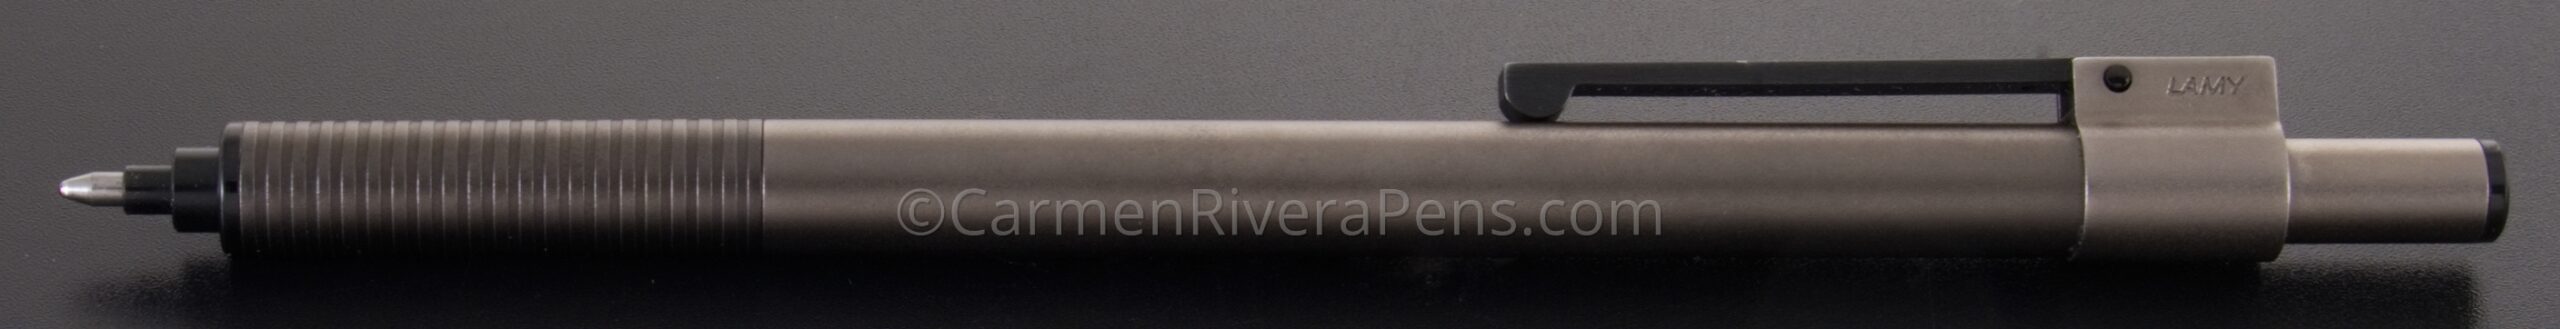 lamy unic stainless steel gunmetal gray ballpoint pen